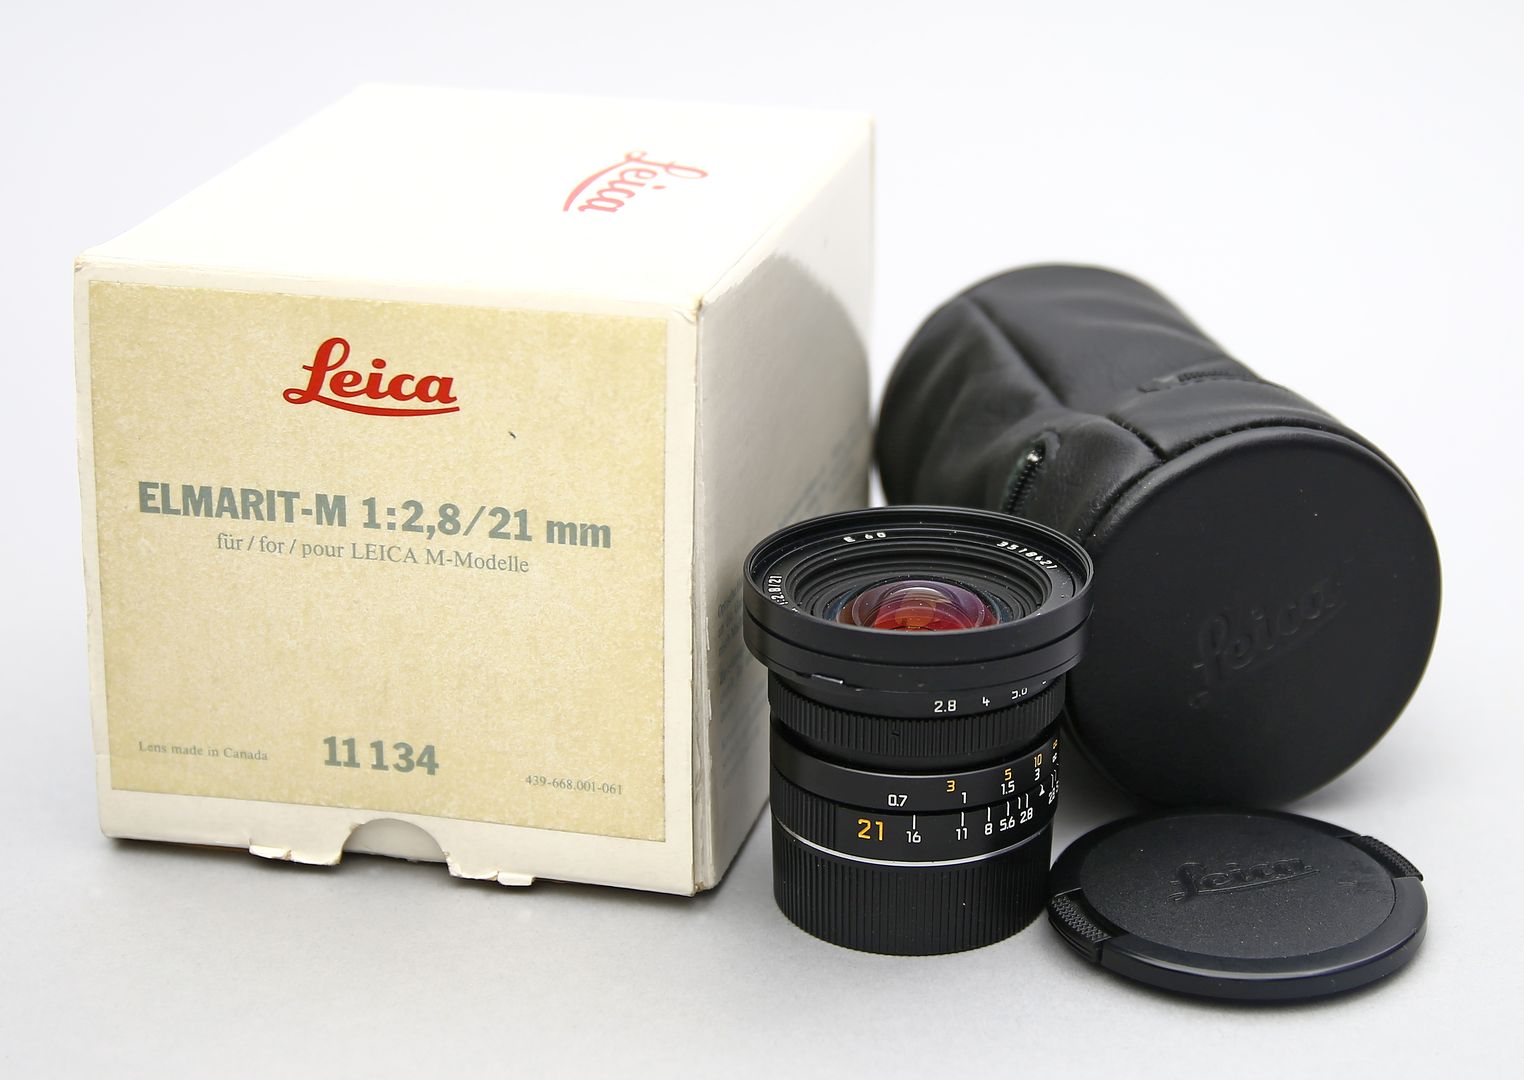 Objektiv "ELMARIT-M 1:2,8/21 mm", Leica.